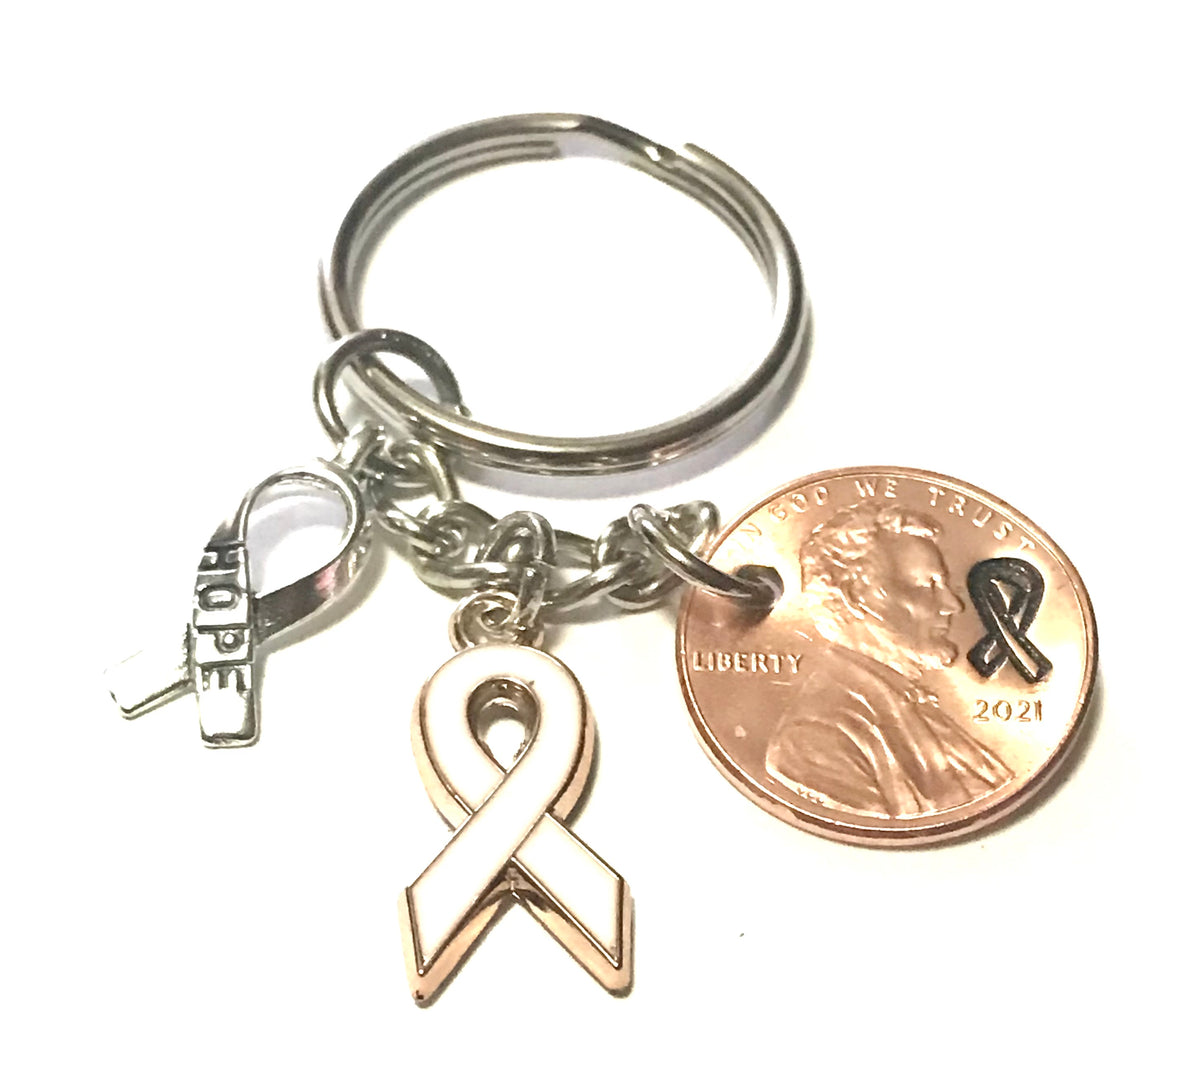 CinDWood Crafts Cancer Awareness Pink Pom Pom Keychain